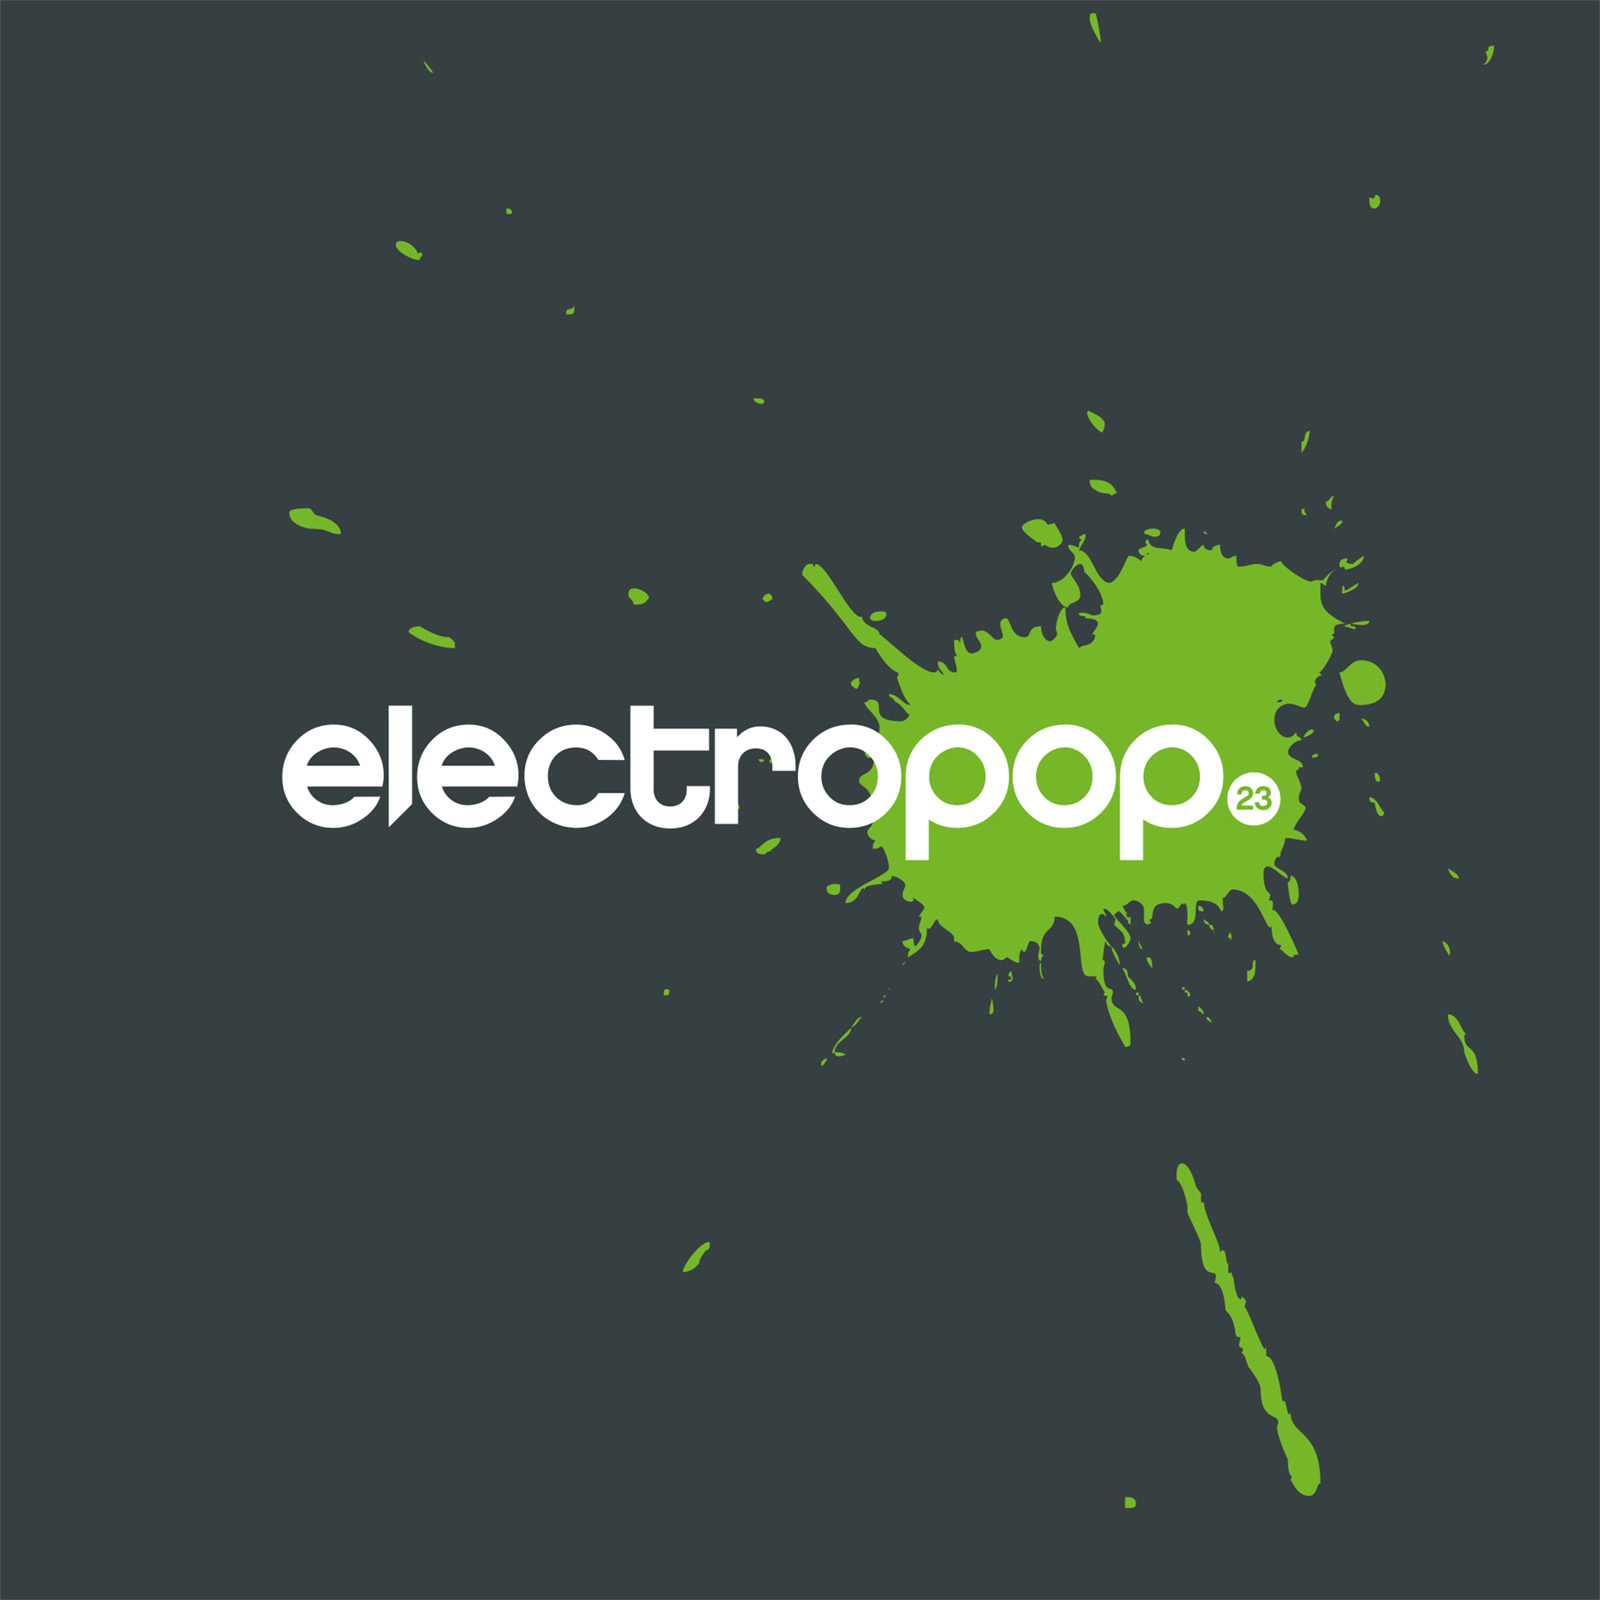 electropop.23